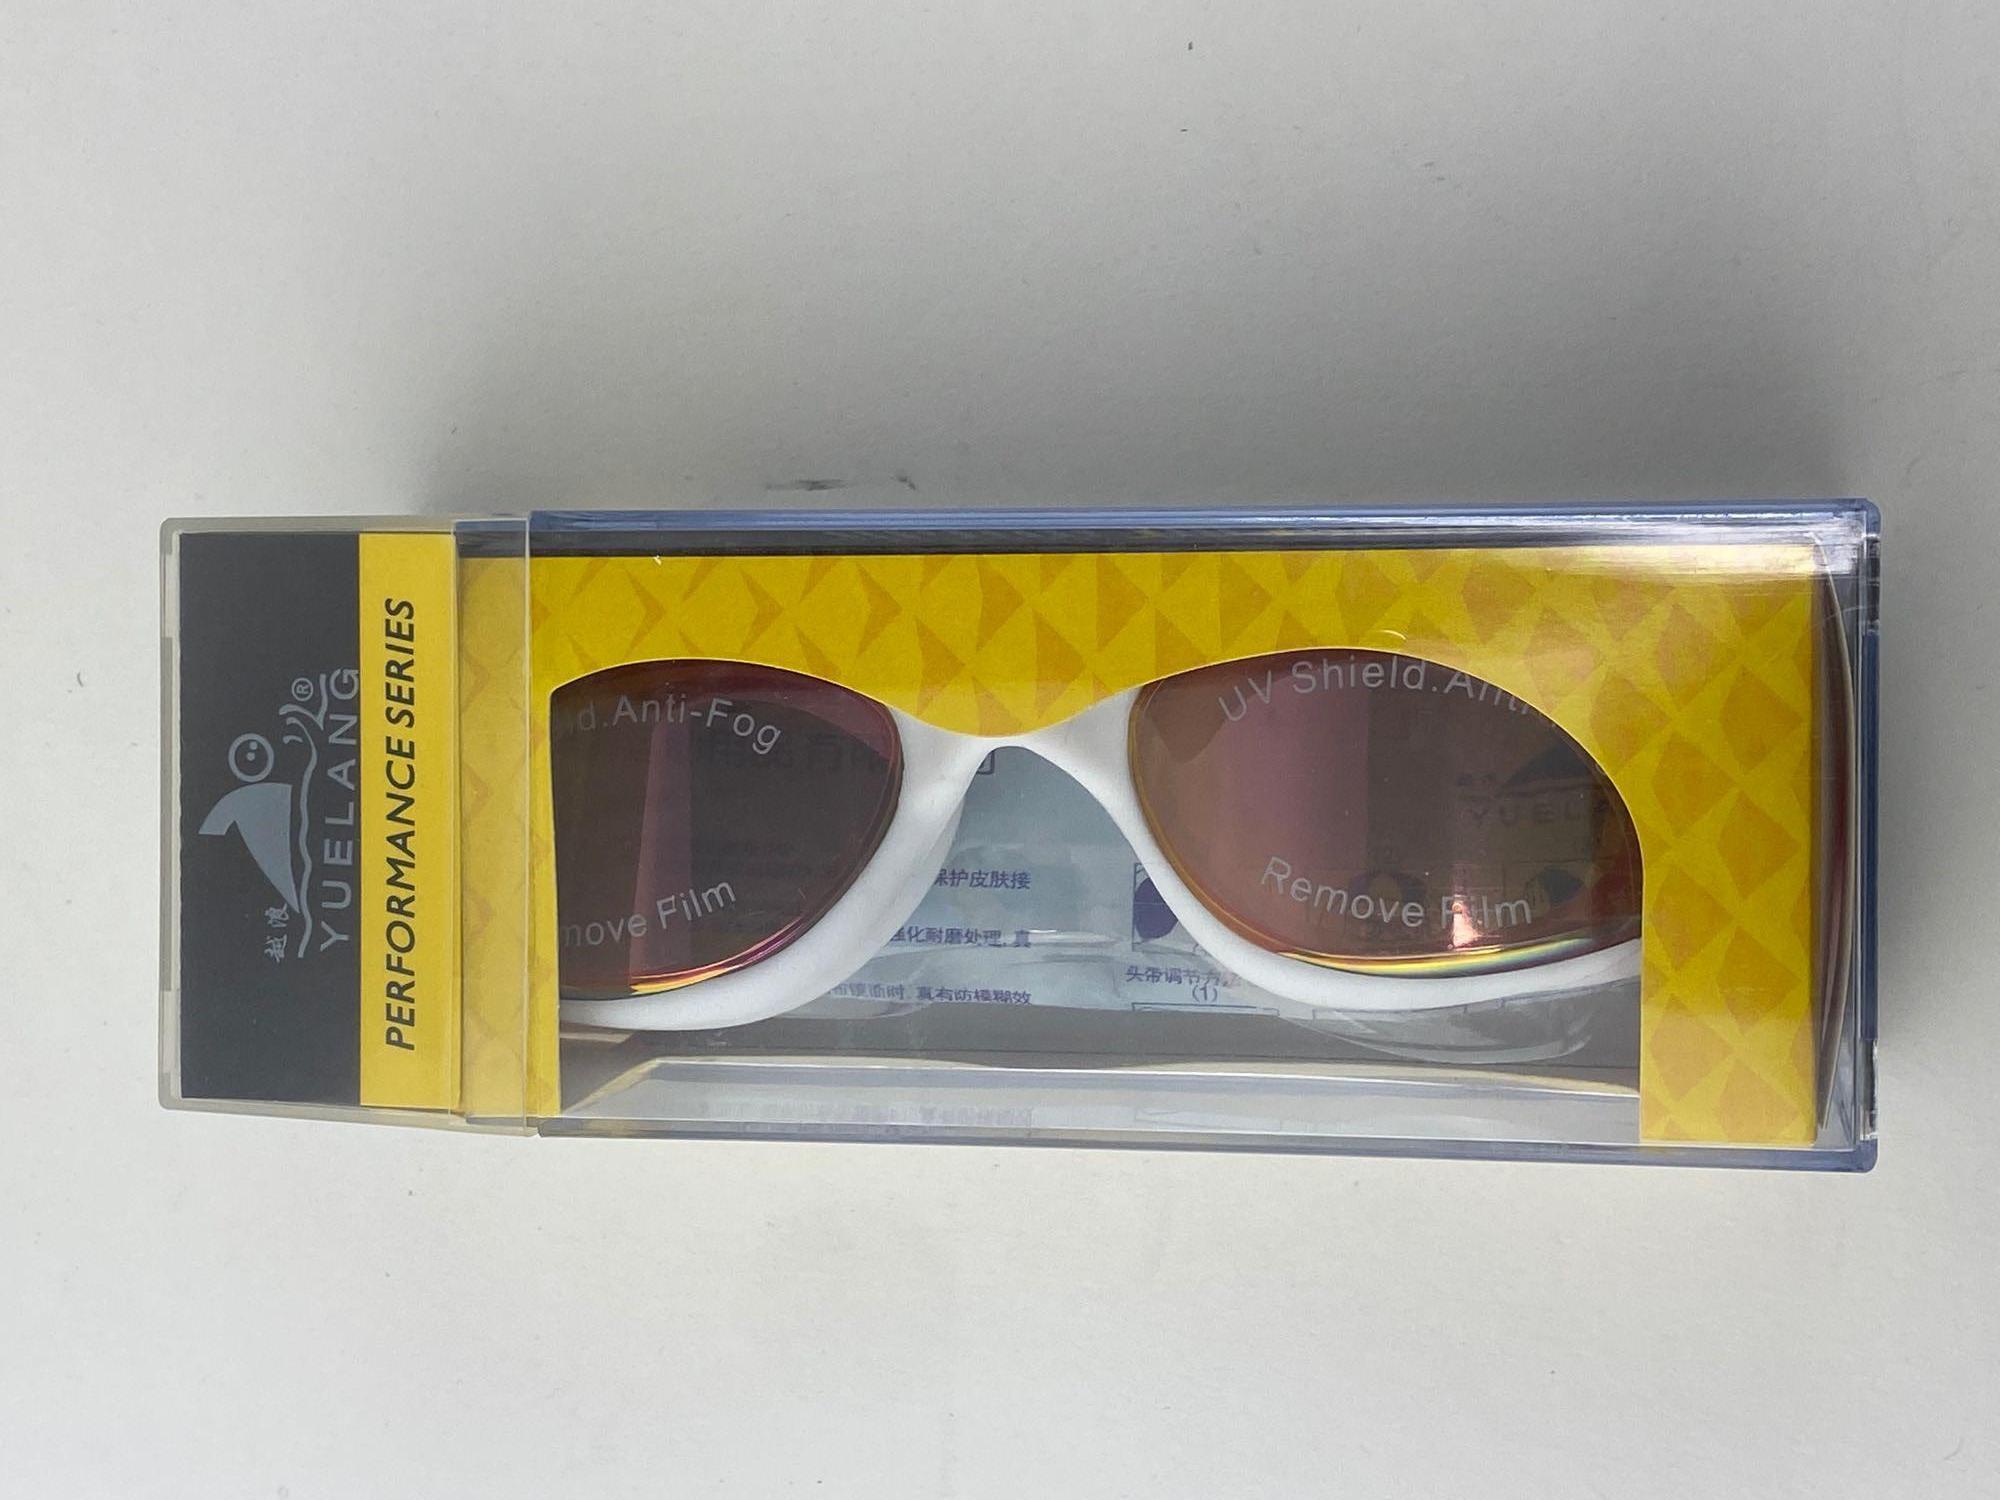 Anti-Fog Polarised Swimming Goggles - Black, $34.99 MSRP (BRAND NEW)